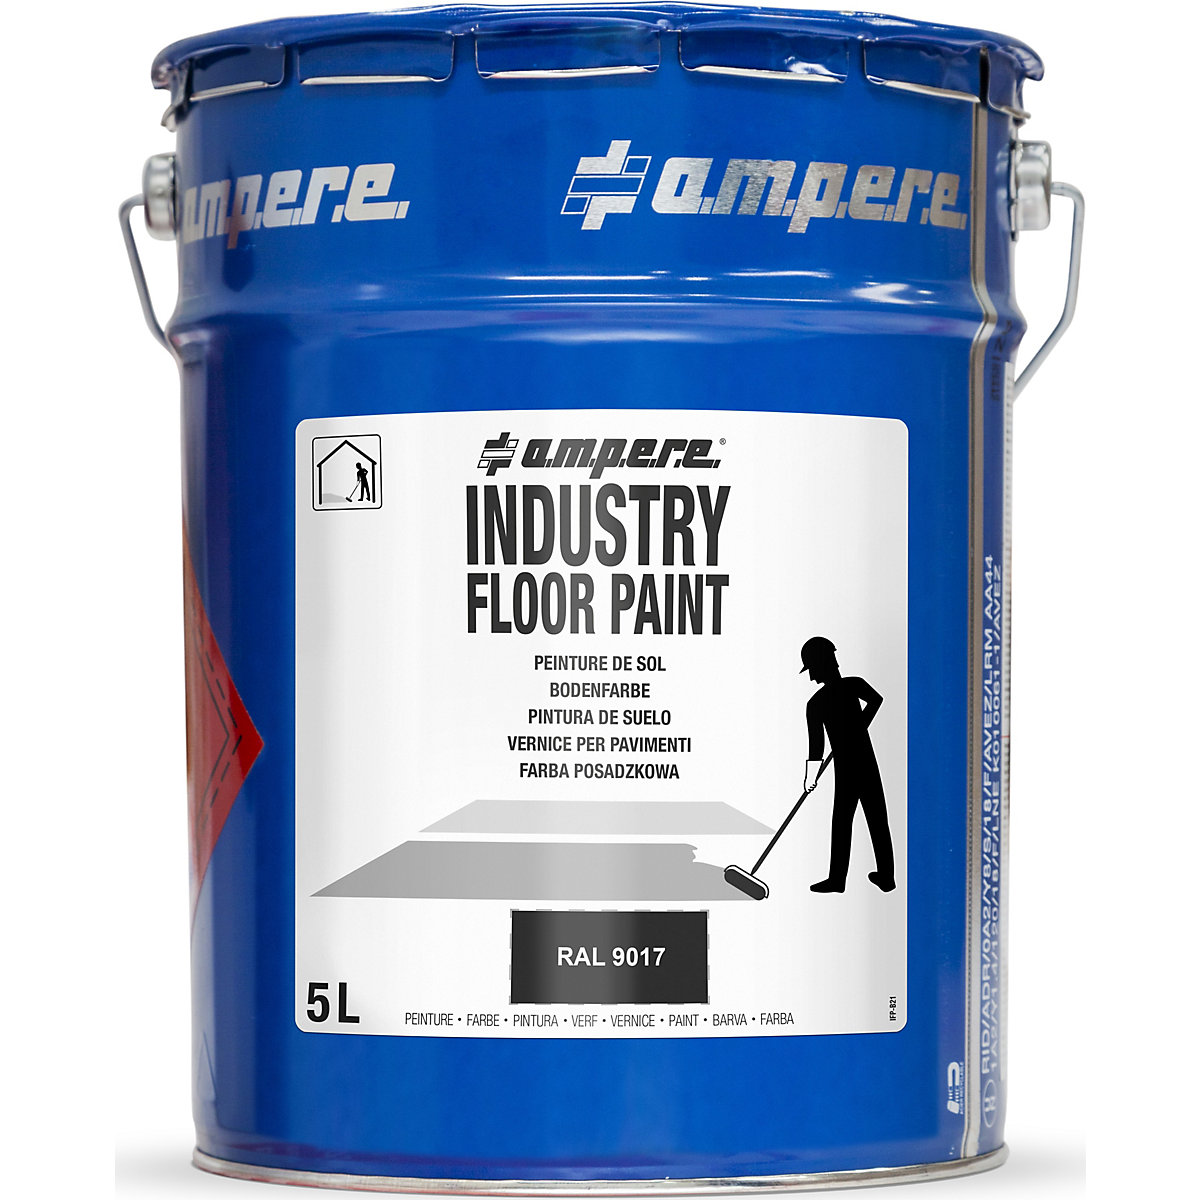 a.m.p.e.r.e Bodenmarkierungsfarbe Industry Floor Paint®, Inhalt 5 l, schwarz